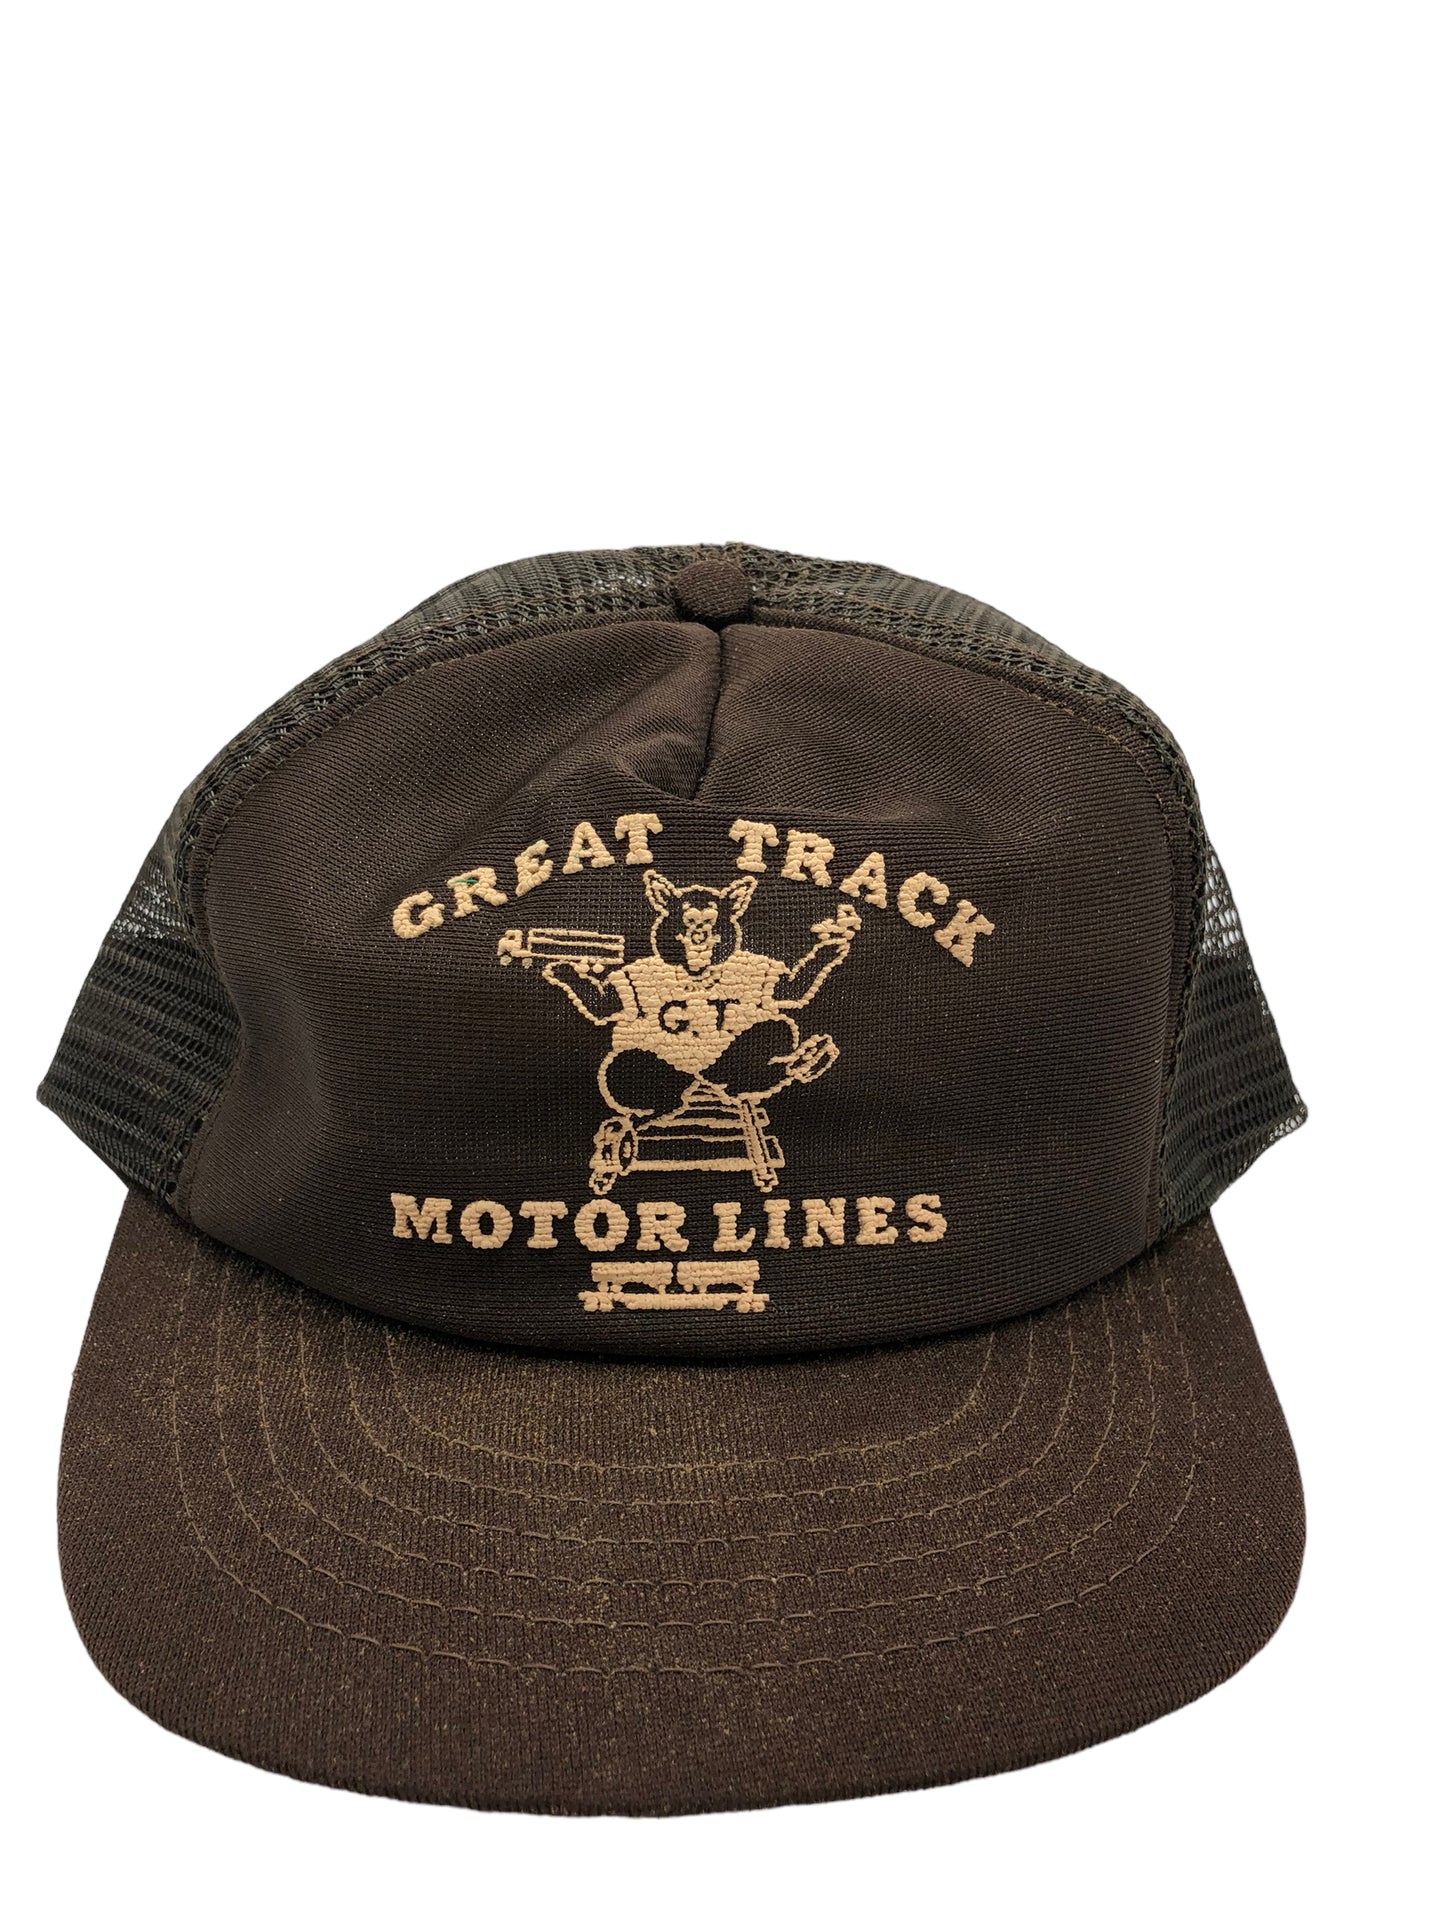 VTG Great Track Motor Lines Trucker Hat